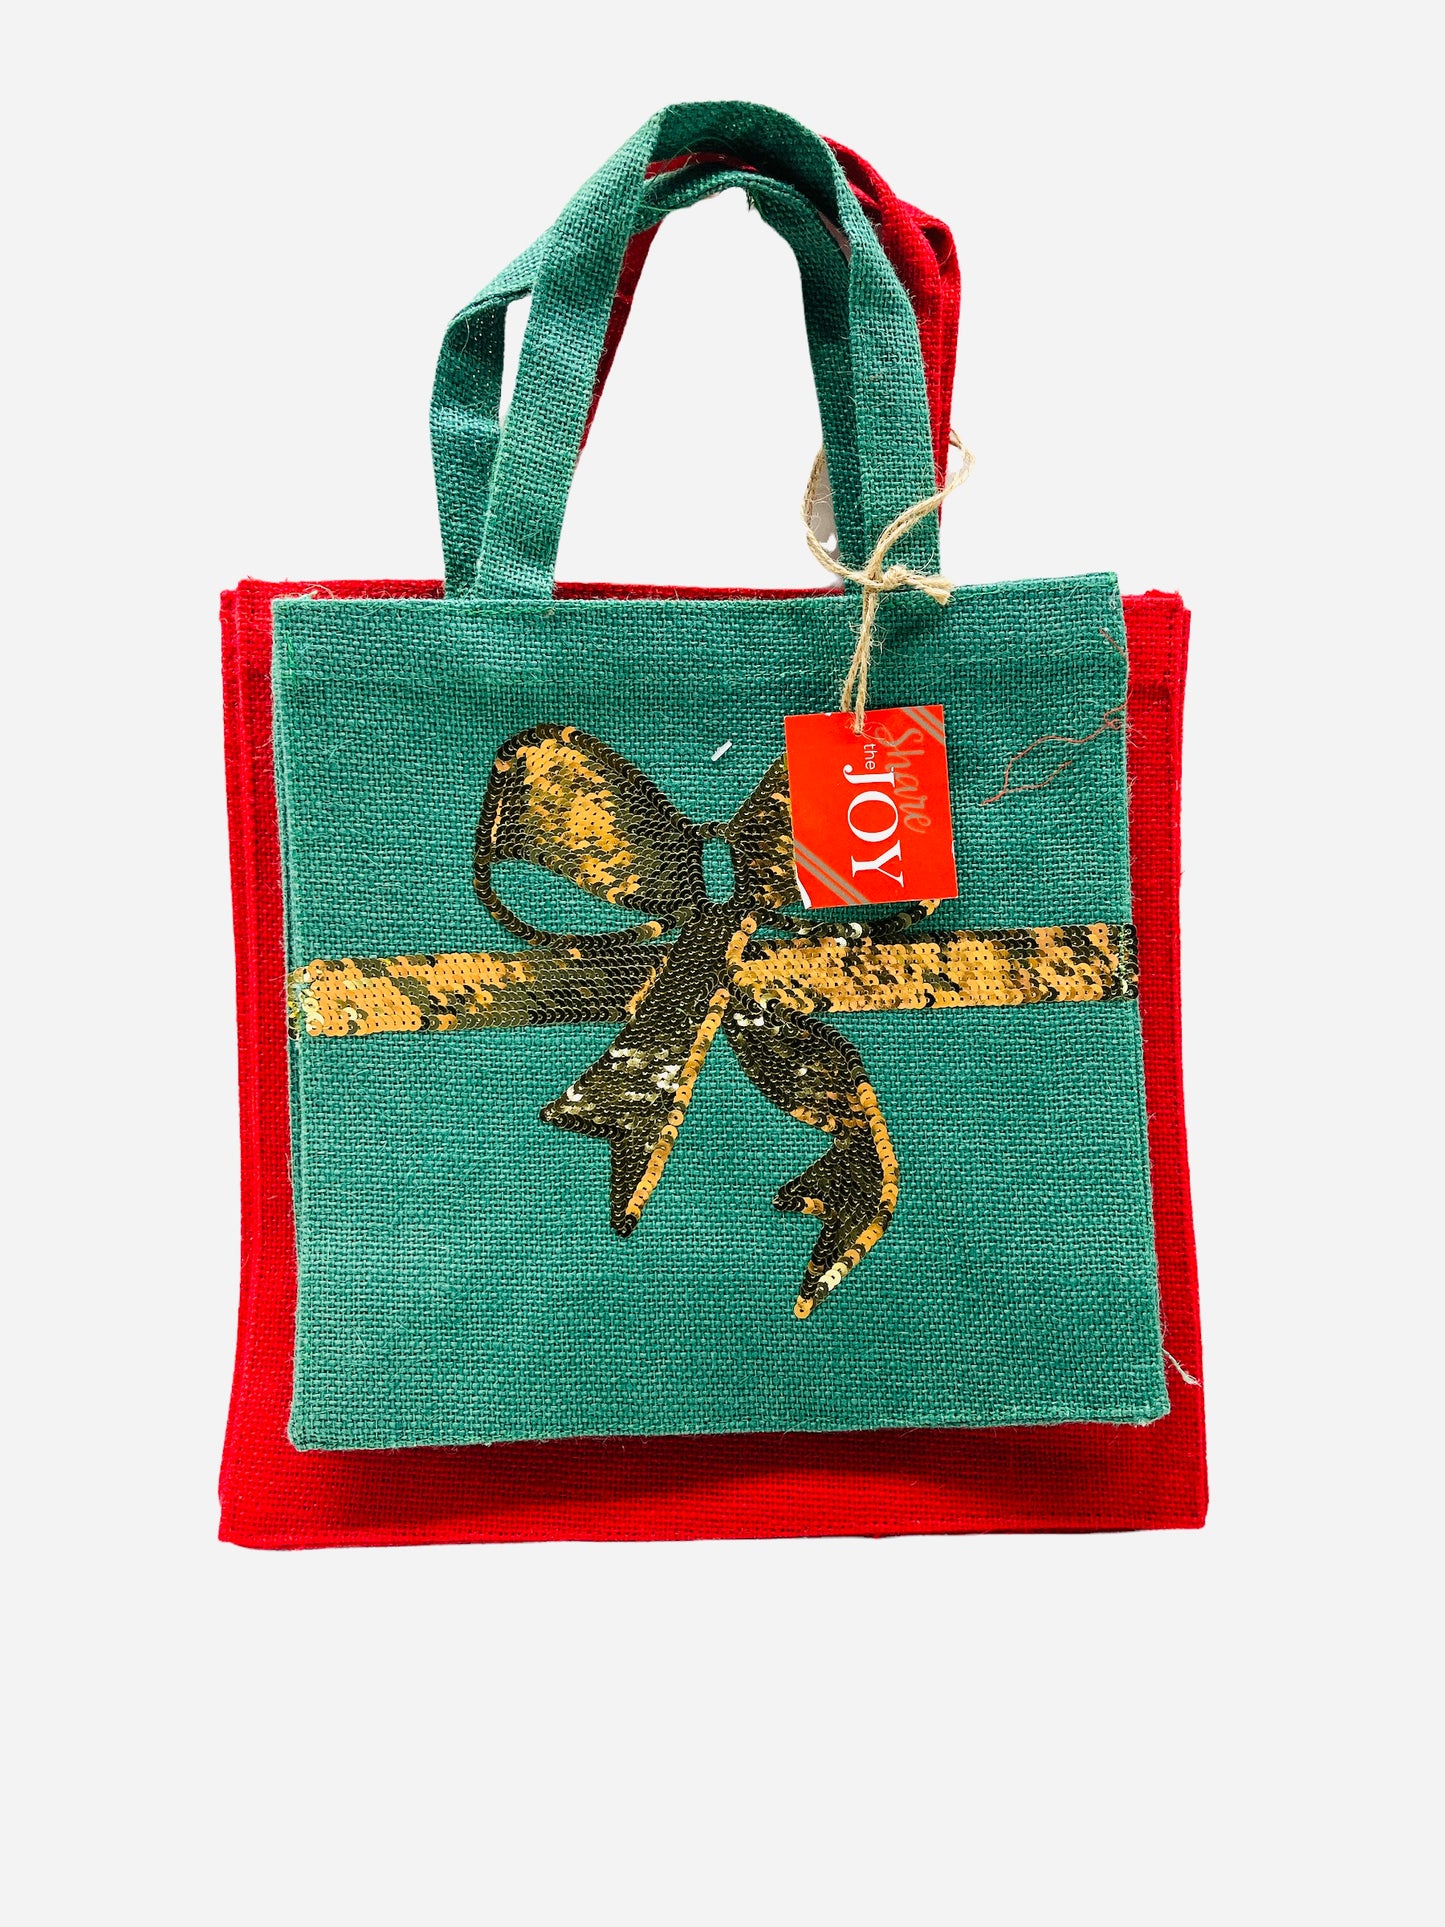 Share The Joy Christmas Tote Bag 2 Pack